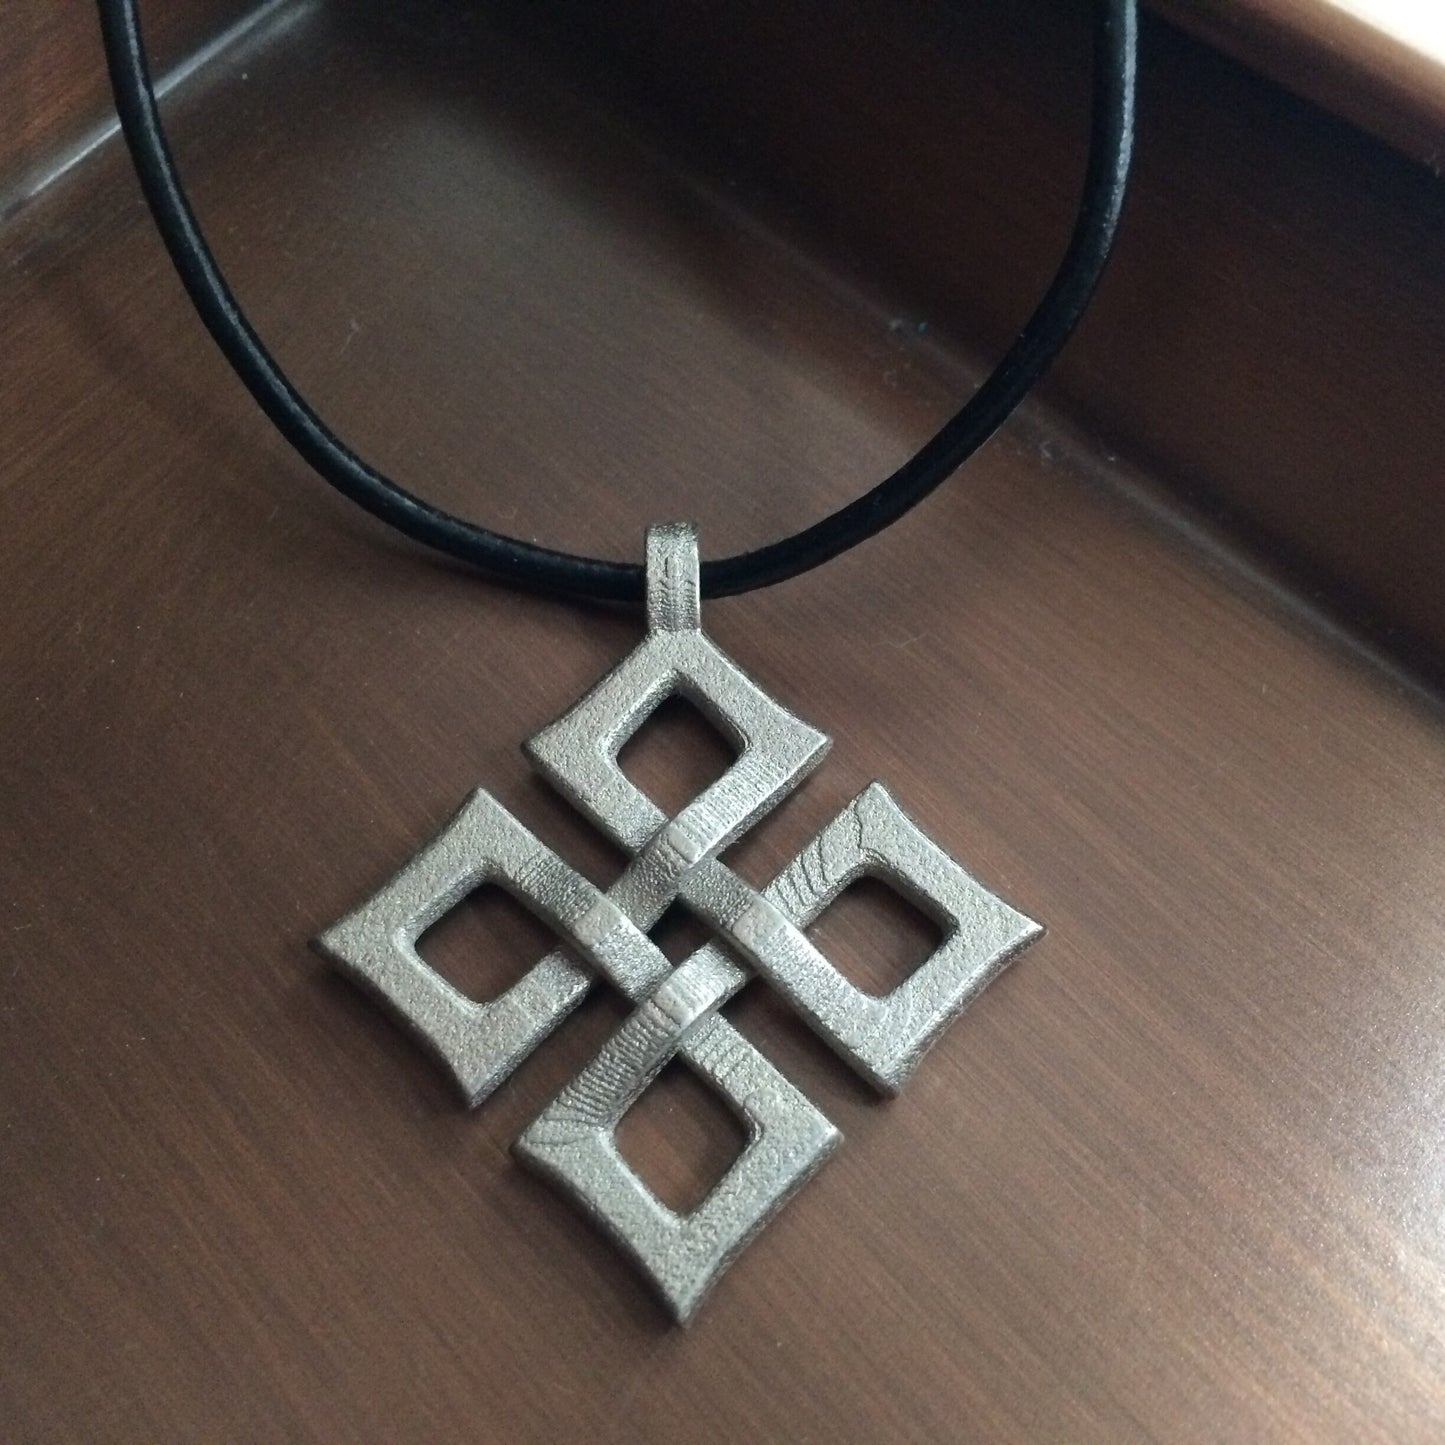 Celtic Cross Necklace, Mens Large Pendant, Leather Pendant Necklace, Artifact Style, Irish Knot Design, Unisex Jewelry